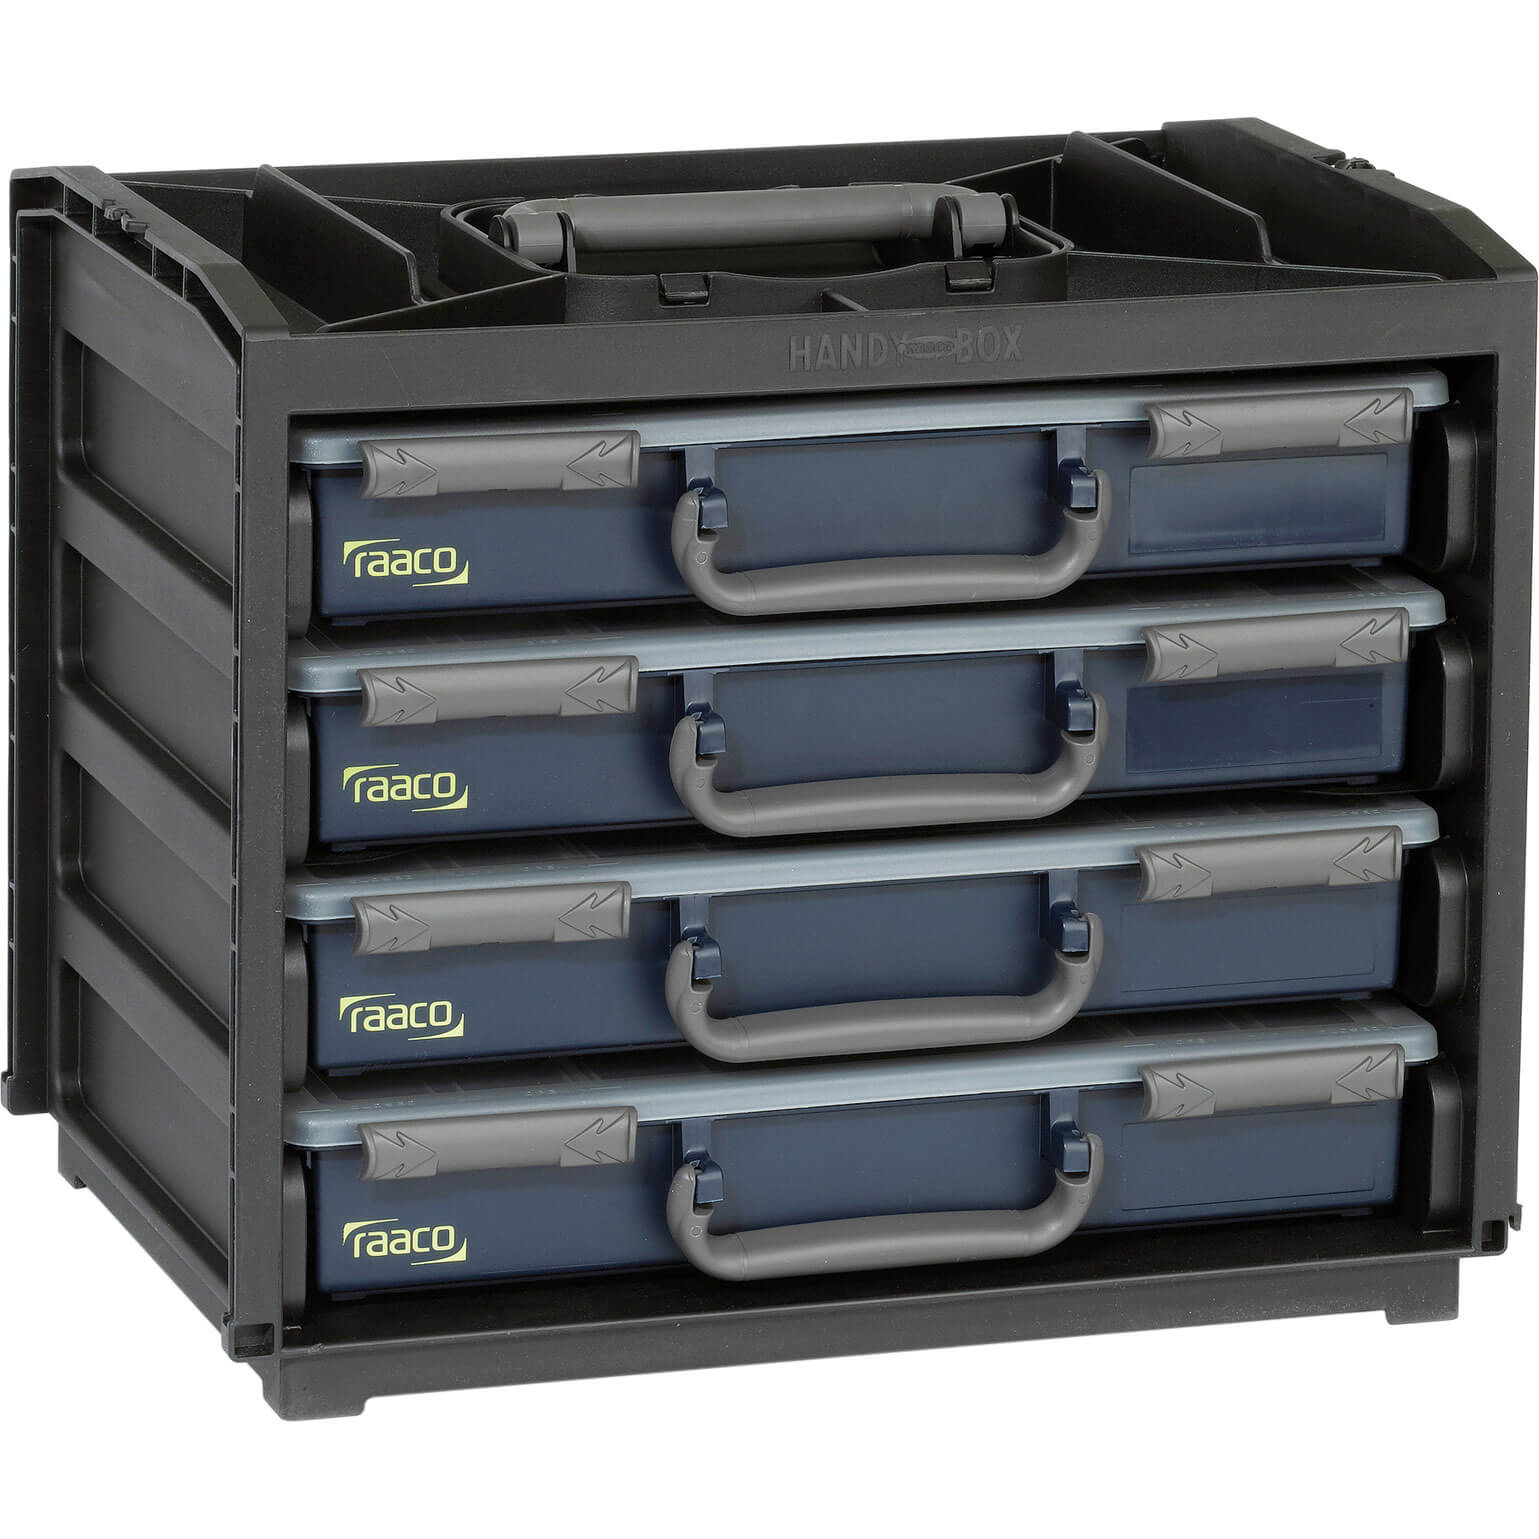 Image of Raaco Handy Box Wall Mountable 4 Drawer Storage Cabinet